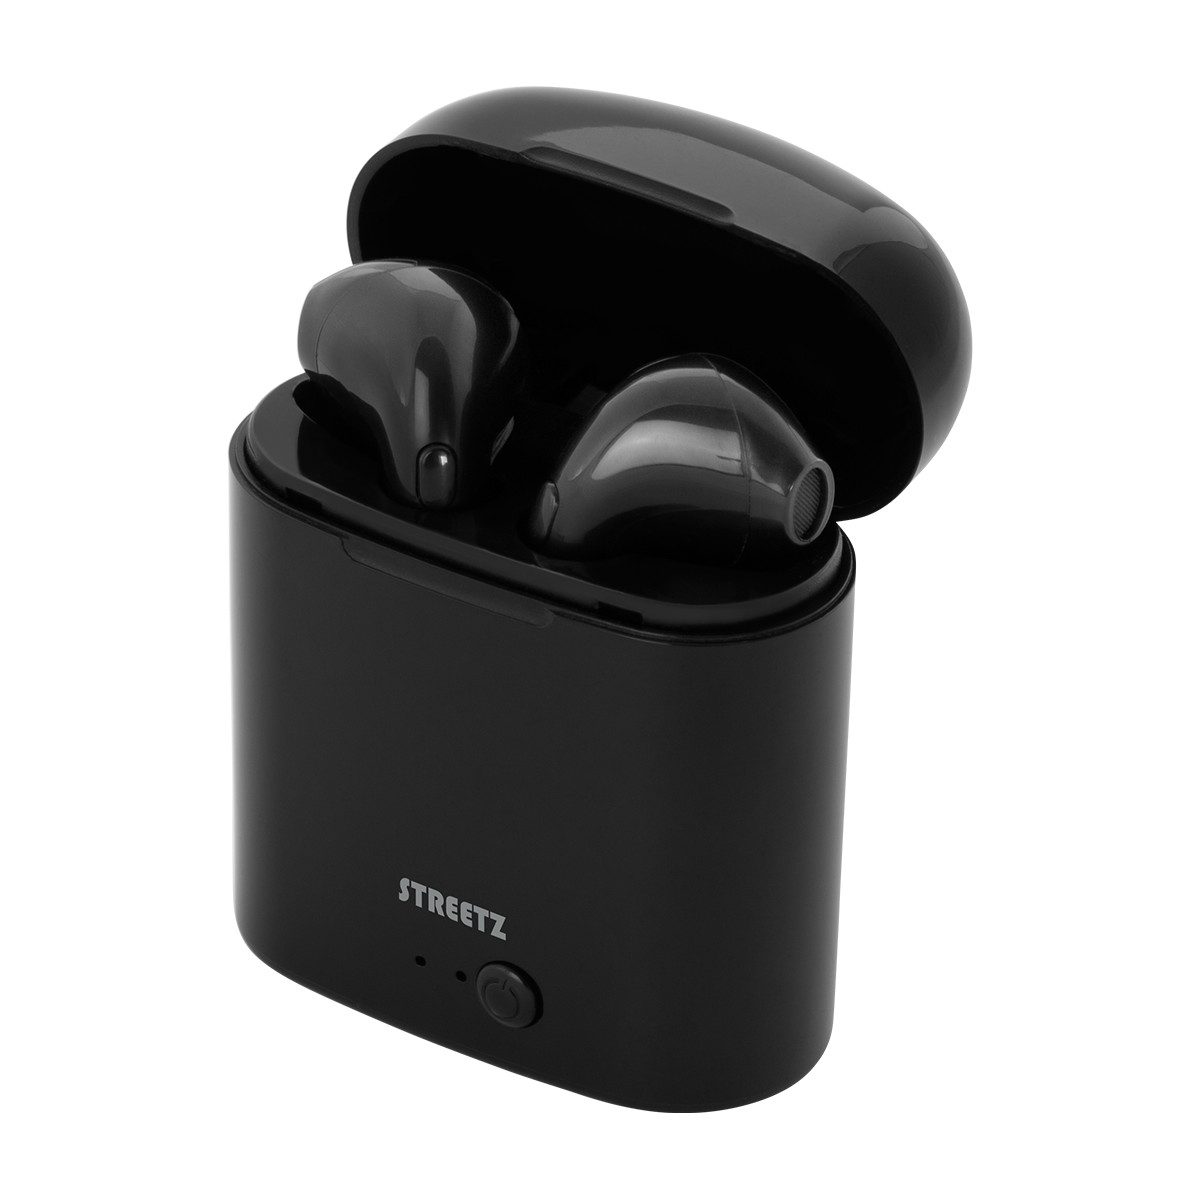 STREETZ trådlösa hörlurar med etui, Bluetooth 5.0, svart